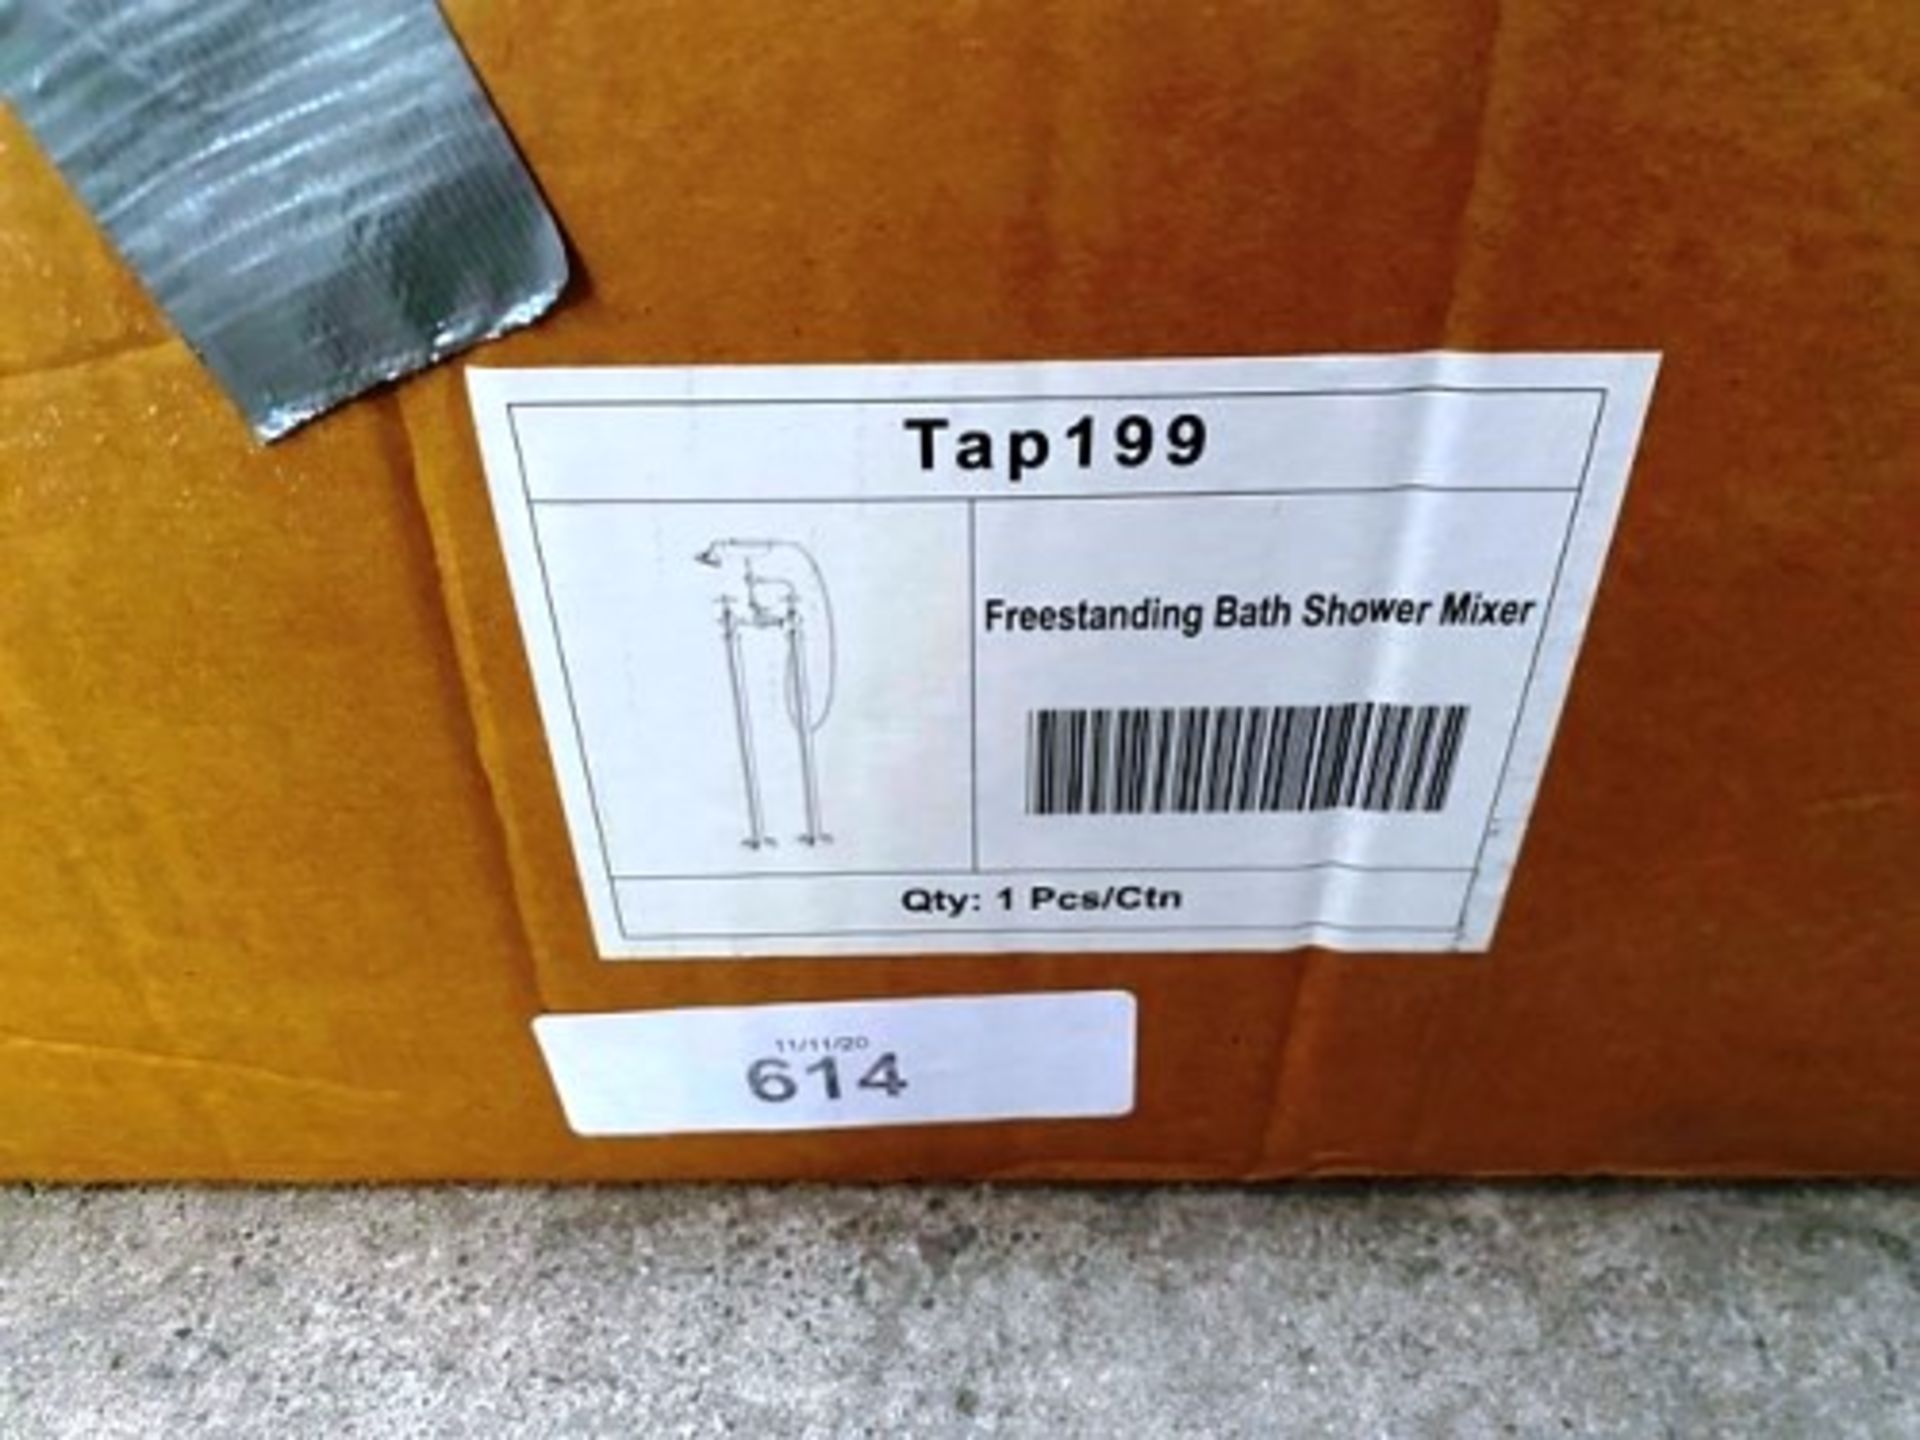 1 x free standing batch shower mixer, model tap199 - New (GS37)